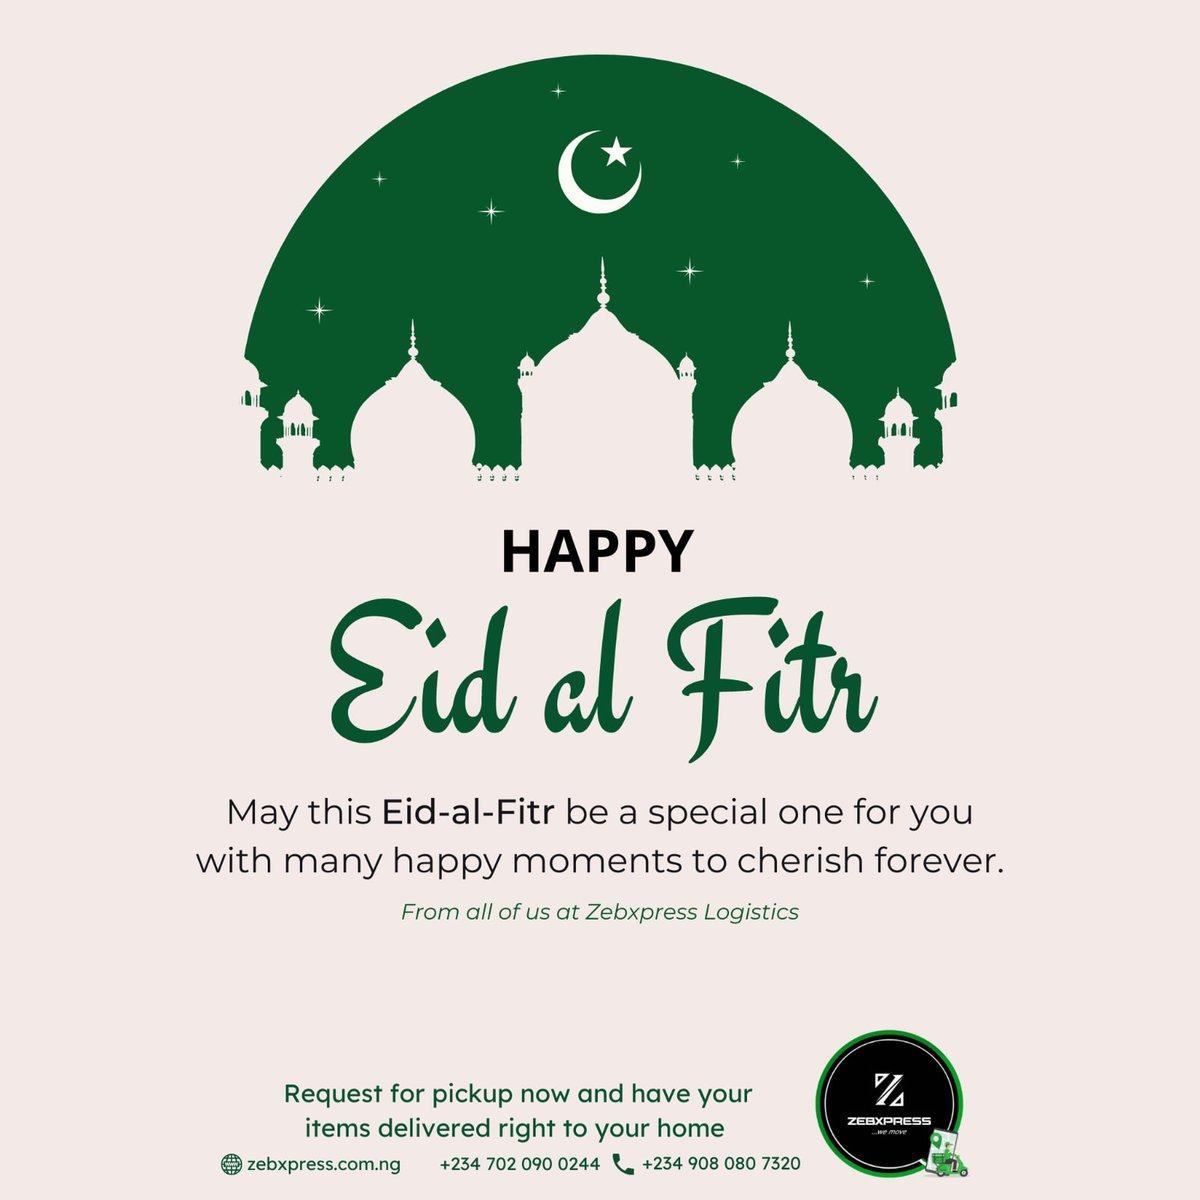 On this auspicious occasion of Eid al-Fitr, may your faith and devotion to Allah be rewarded with divine blessings. Eid Mubarak!

#EidMubarak #EidAlFitr #CelebratingEid #EidOutfit #EidFood #EidDecor #EidSale #EidGifting
#EidPrayers #EidCelebrations #EidSelfie #EidFashion